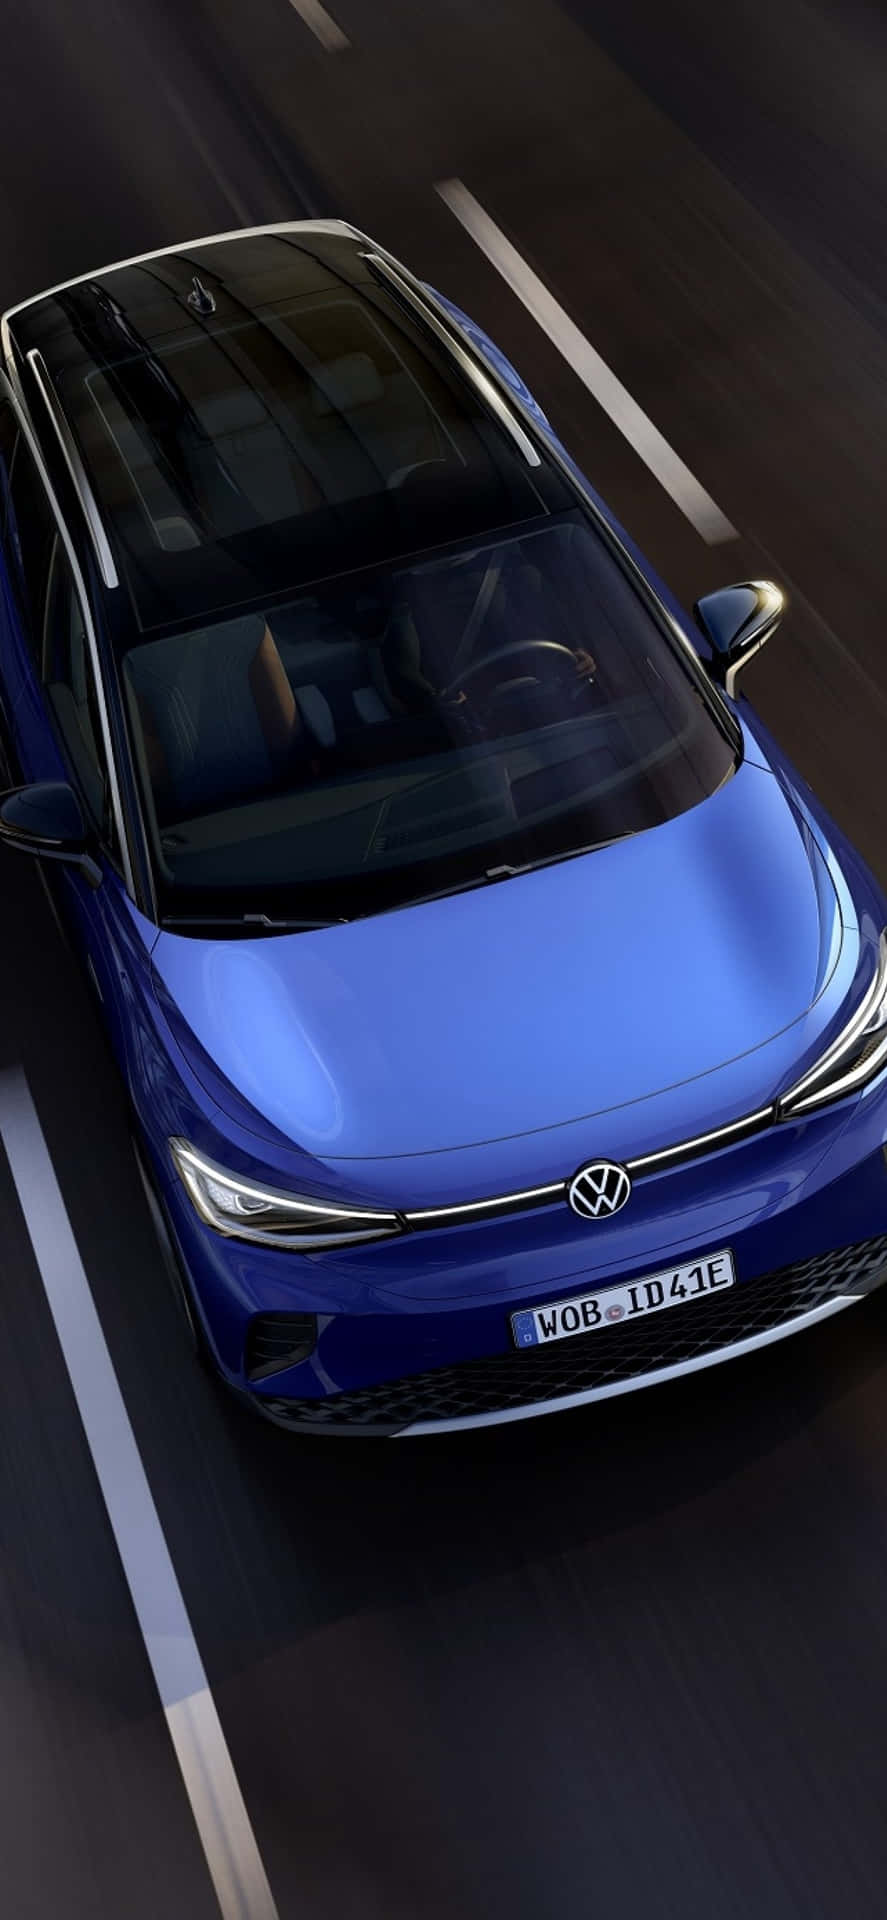 Innovative Volkswagen Id 4 - Stunning Display Of Cutting-edge Technology Wallpaper